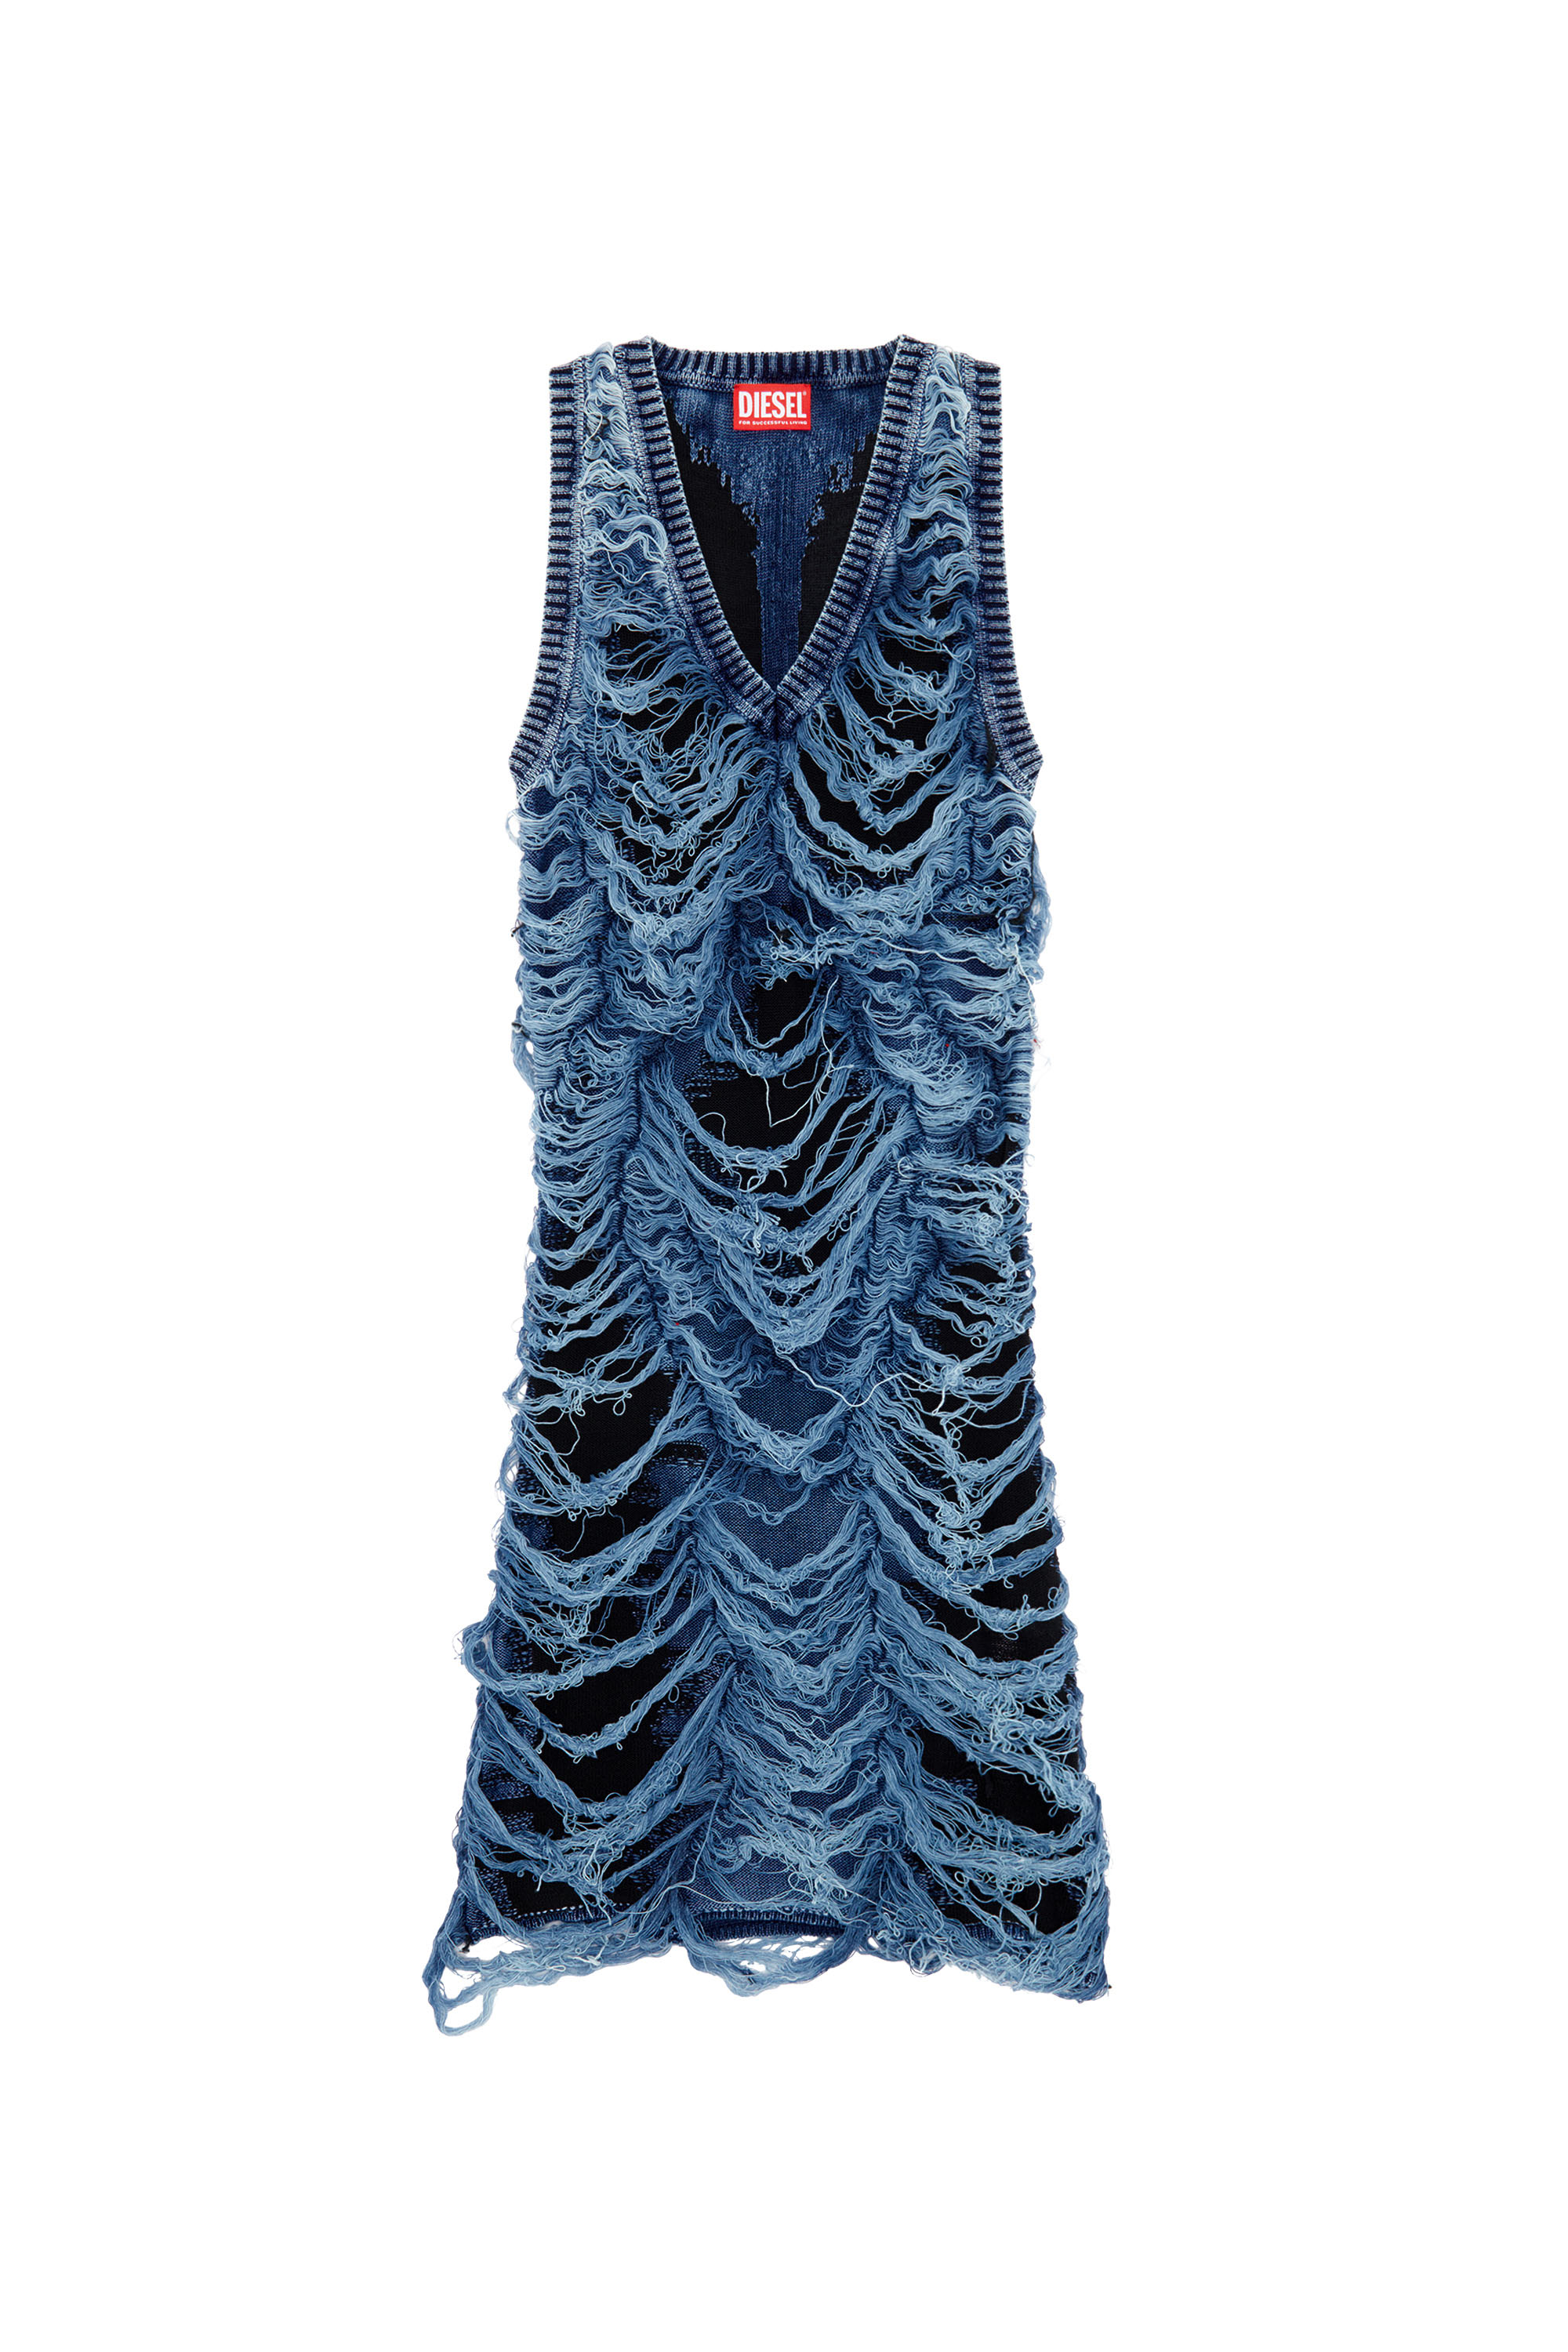 Diesel - M-BIANCA, Woman Short dress in destroyed indigo knit in Blue - Image 5